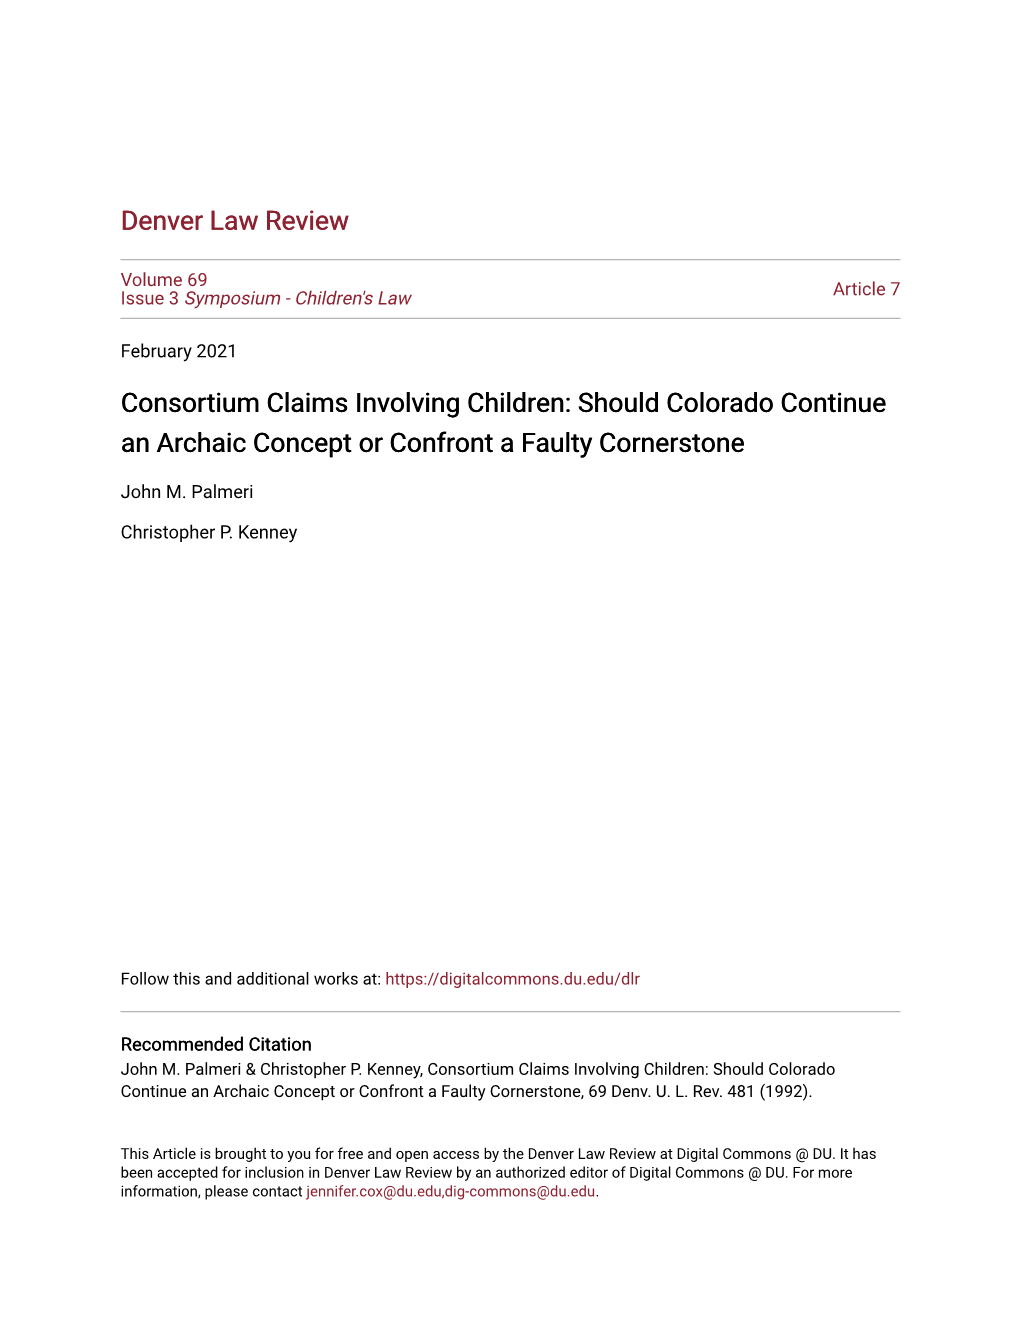 Consortium Claims Involving Children: Should Colorado Continue an Archaic Concept Or Confront a Faulty Cornerstone